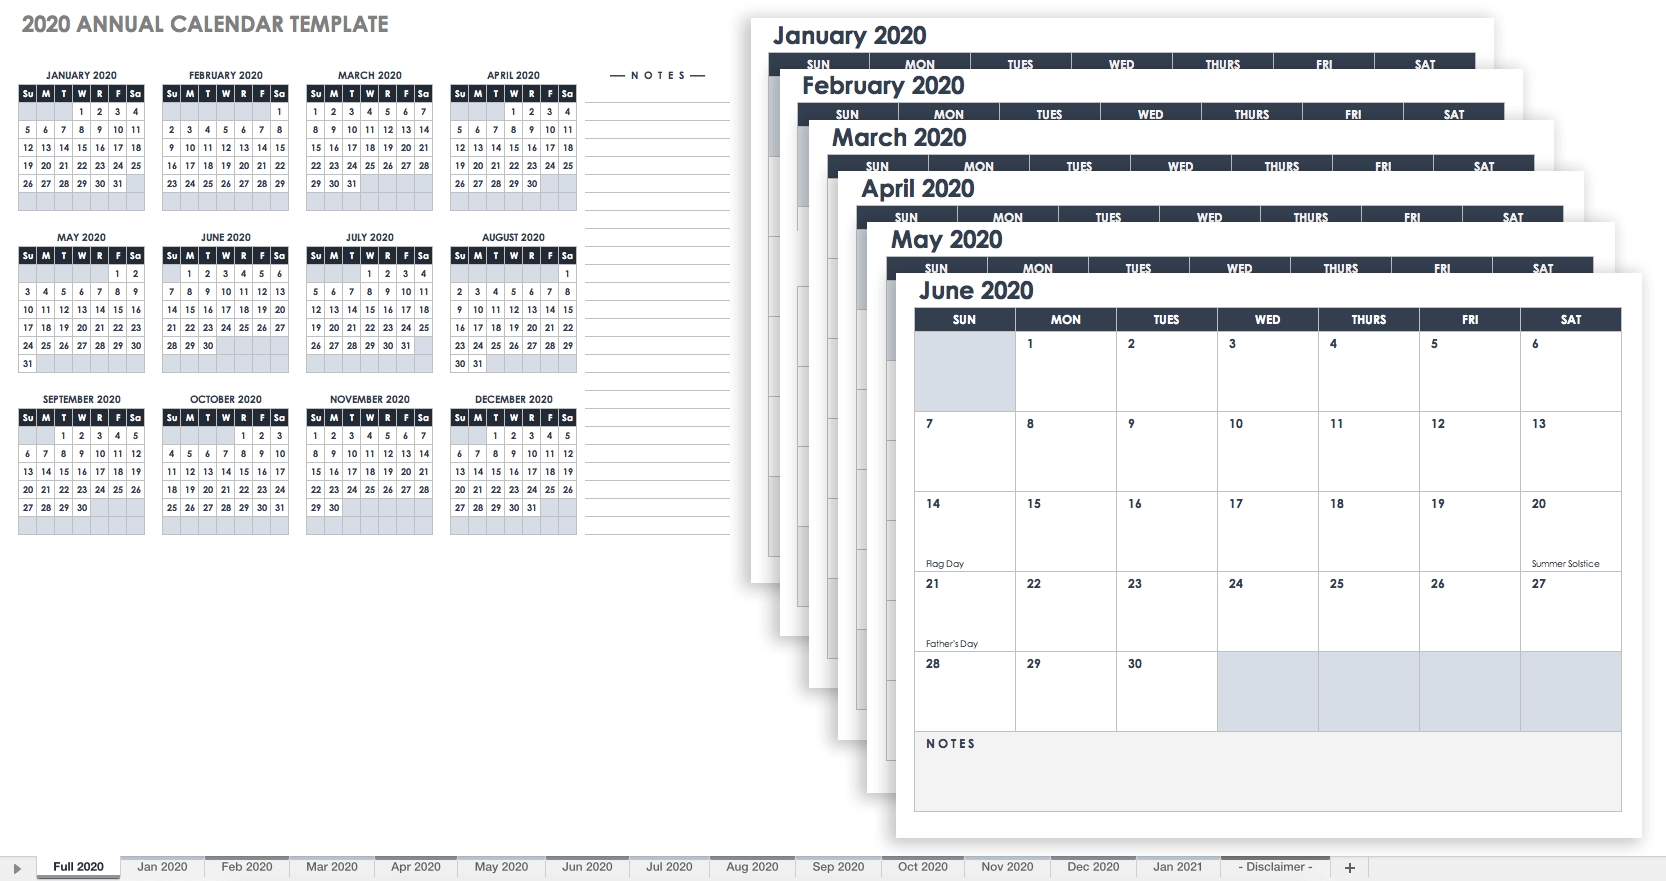 Free Blank Calendar Templates - Smartsheet-Hourly Calendar Template 2020